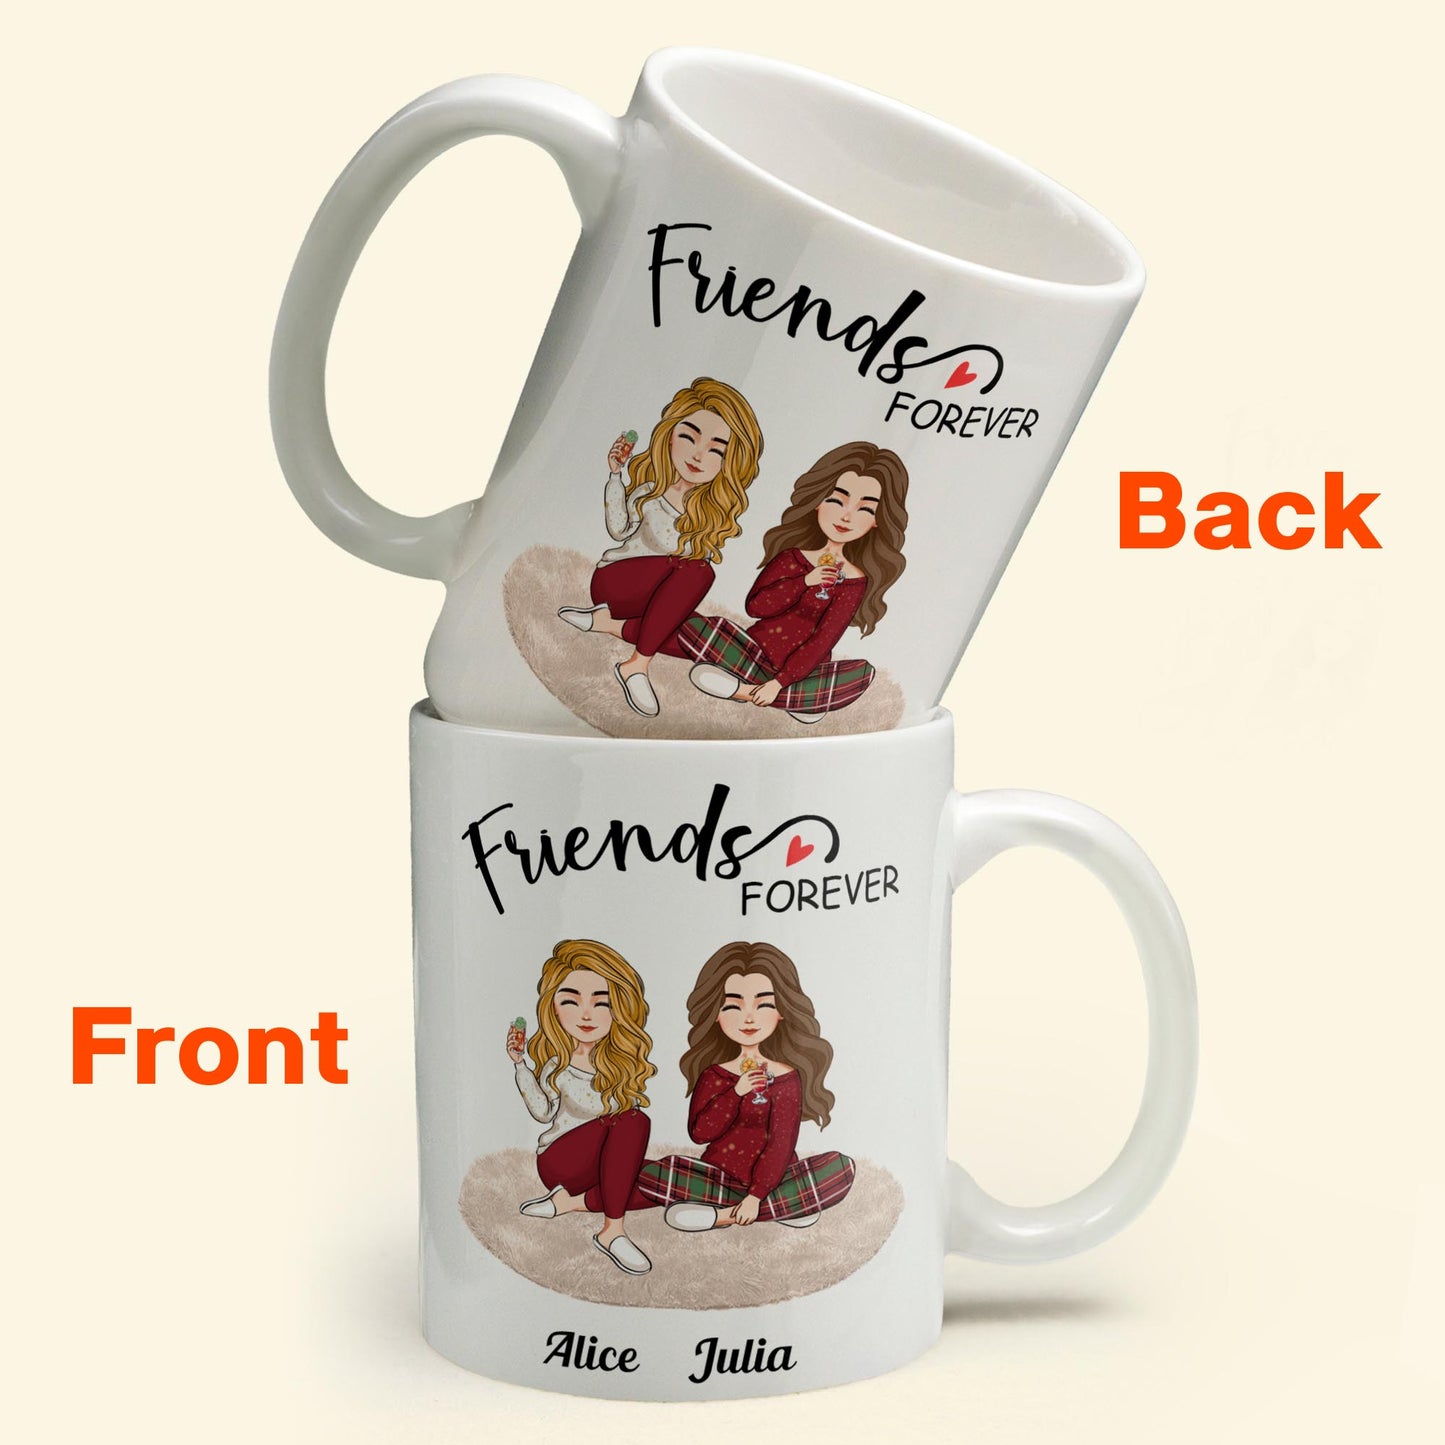 Friendship Forever - Personalized Mug